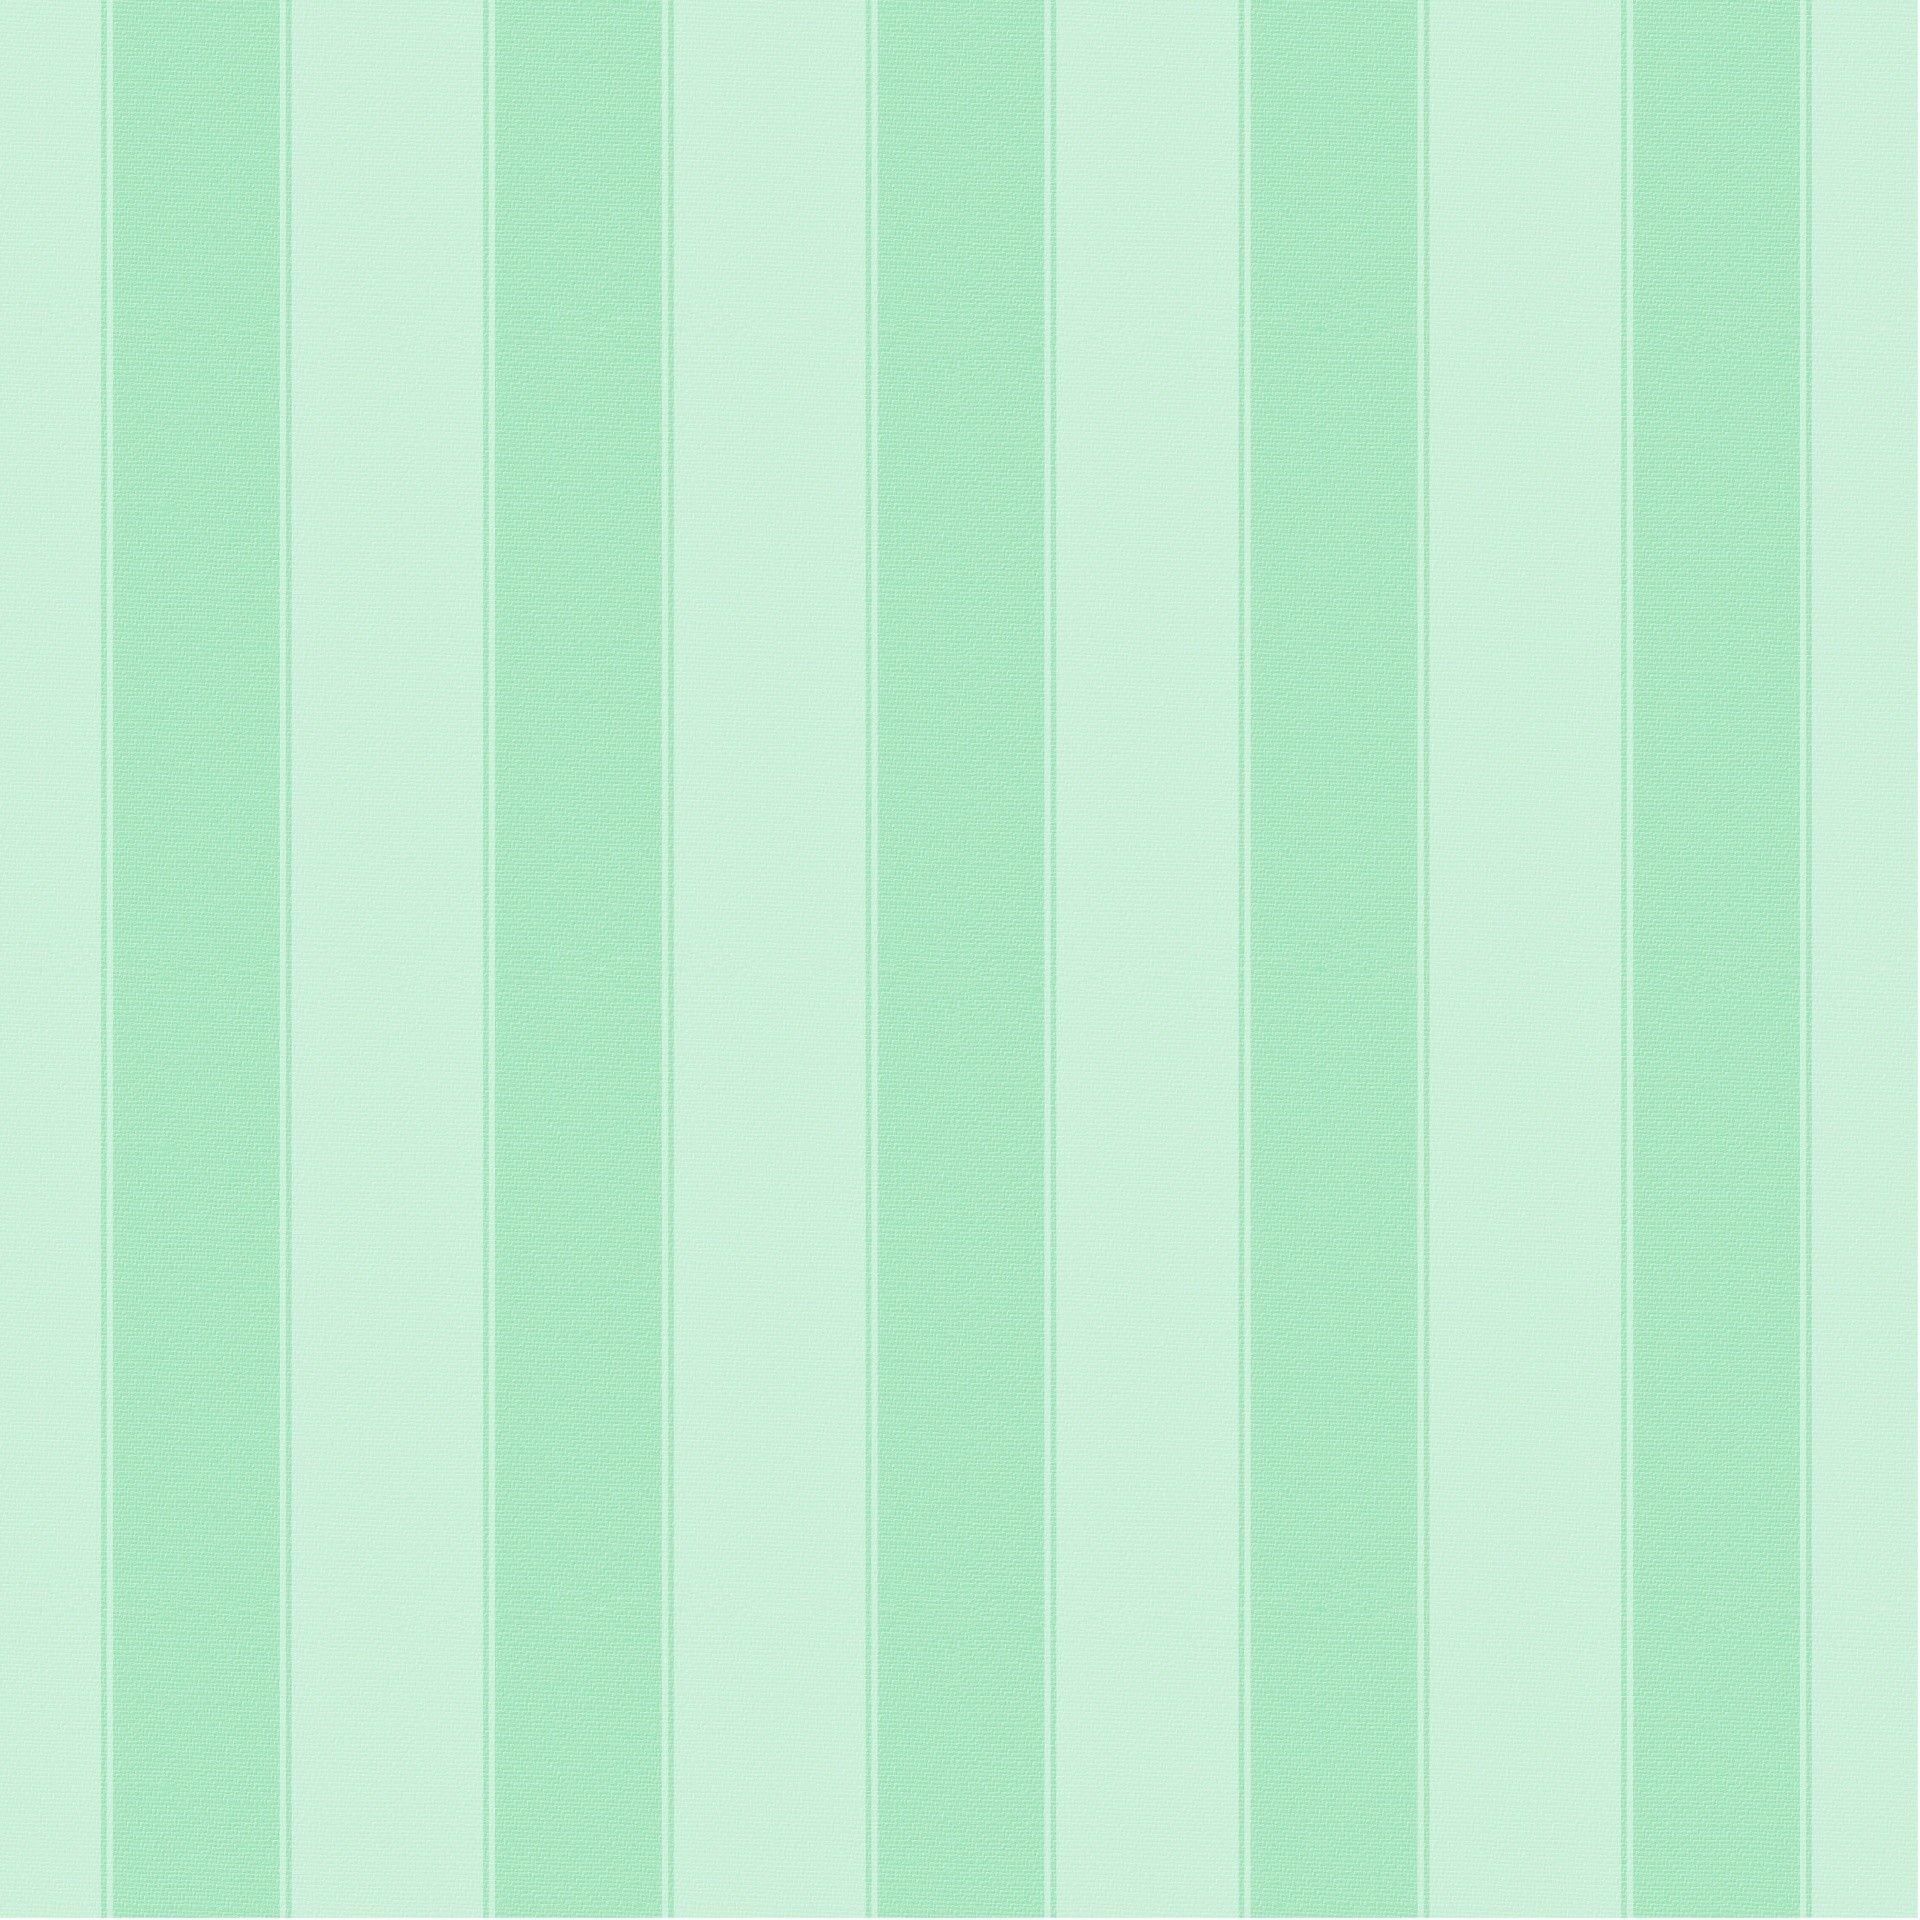 Mint Green Wallpaper (54+ images)